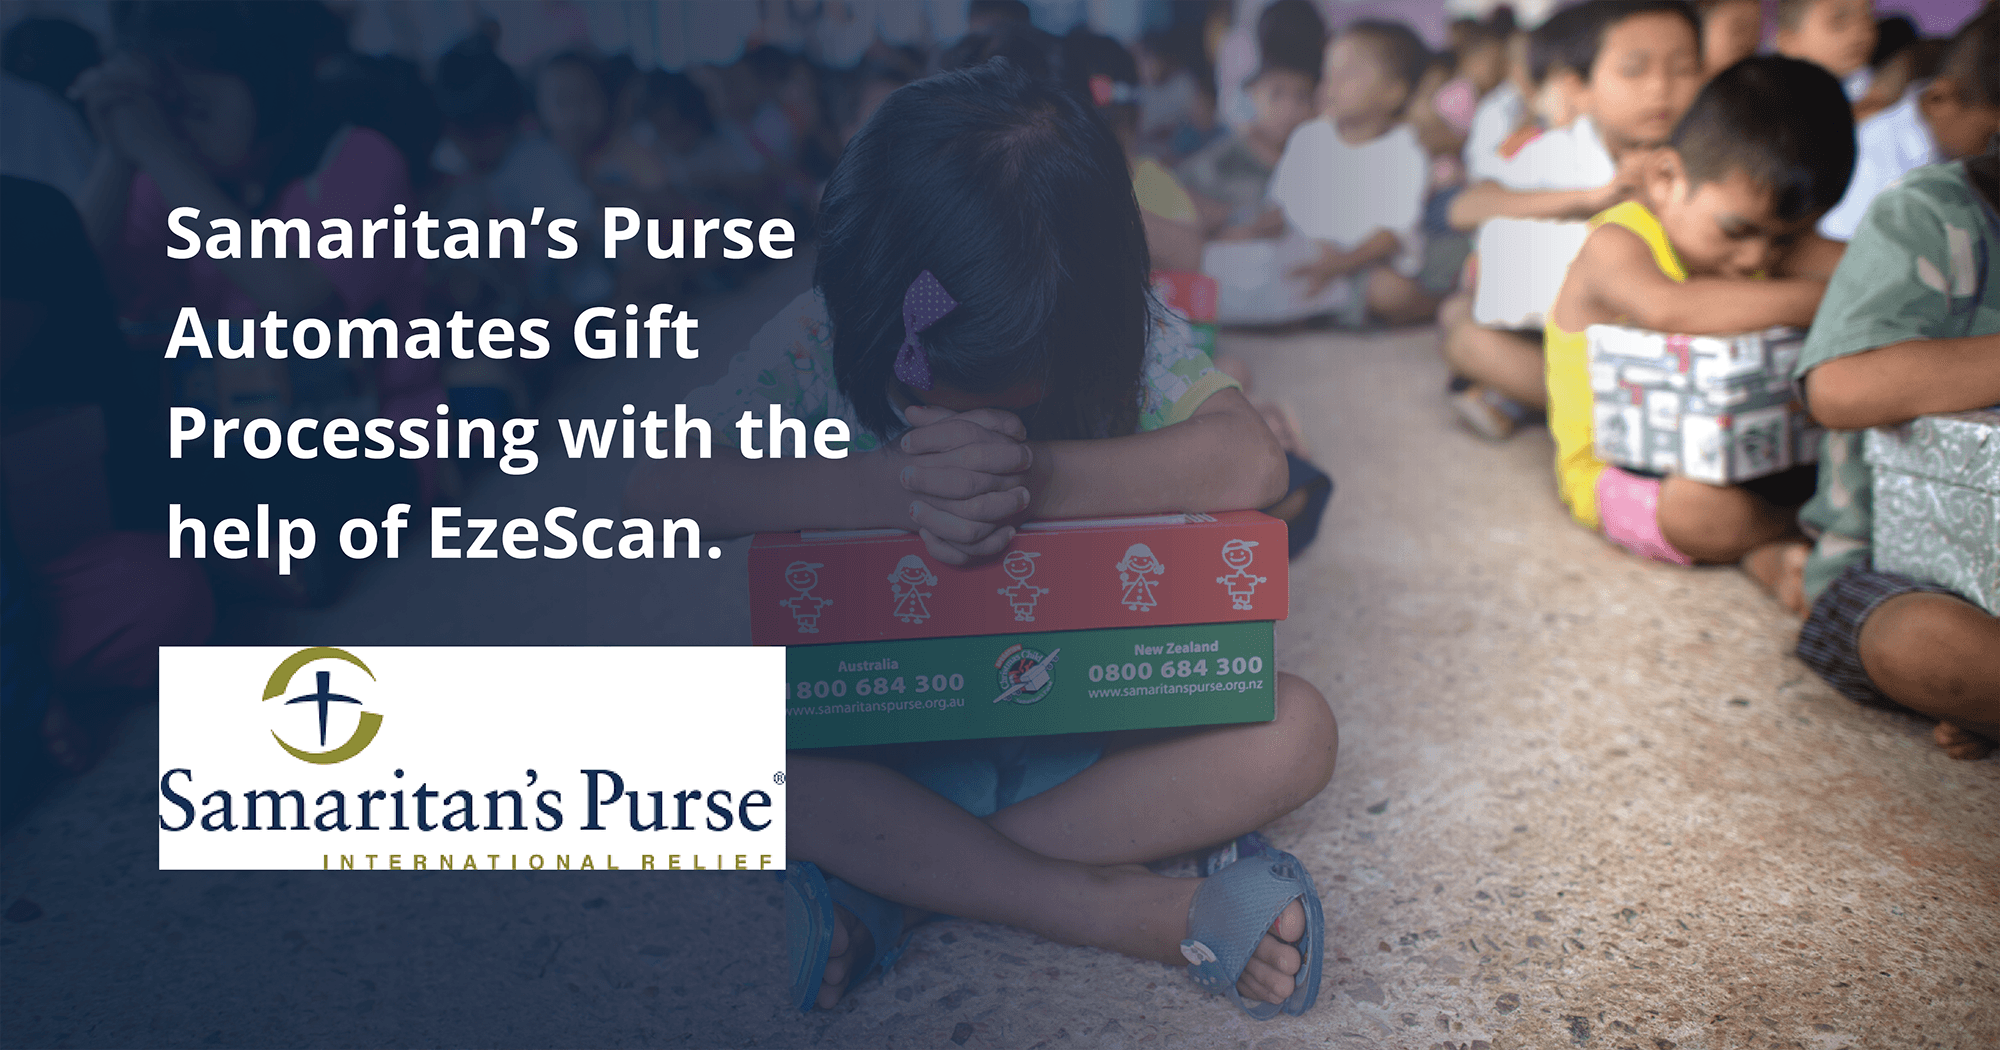 EzeScan-Samaritans-Purse-Case-Study-Featured-Image